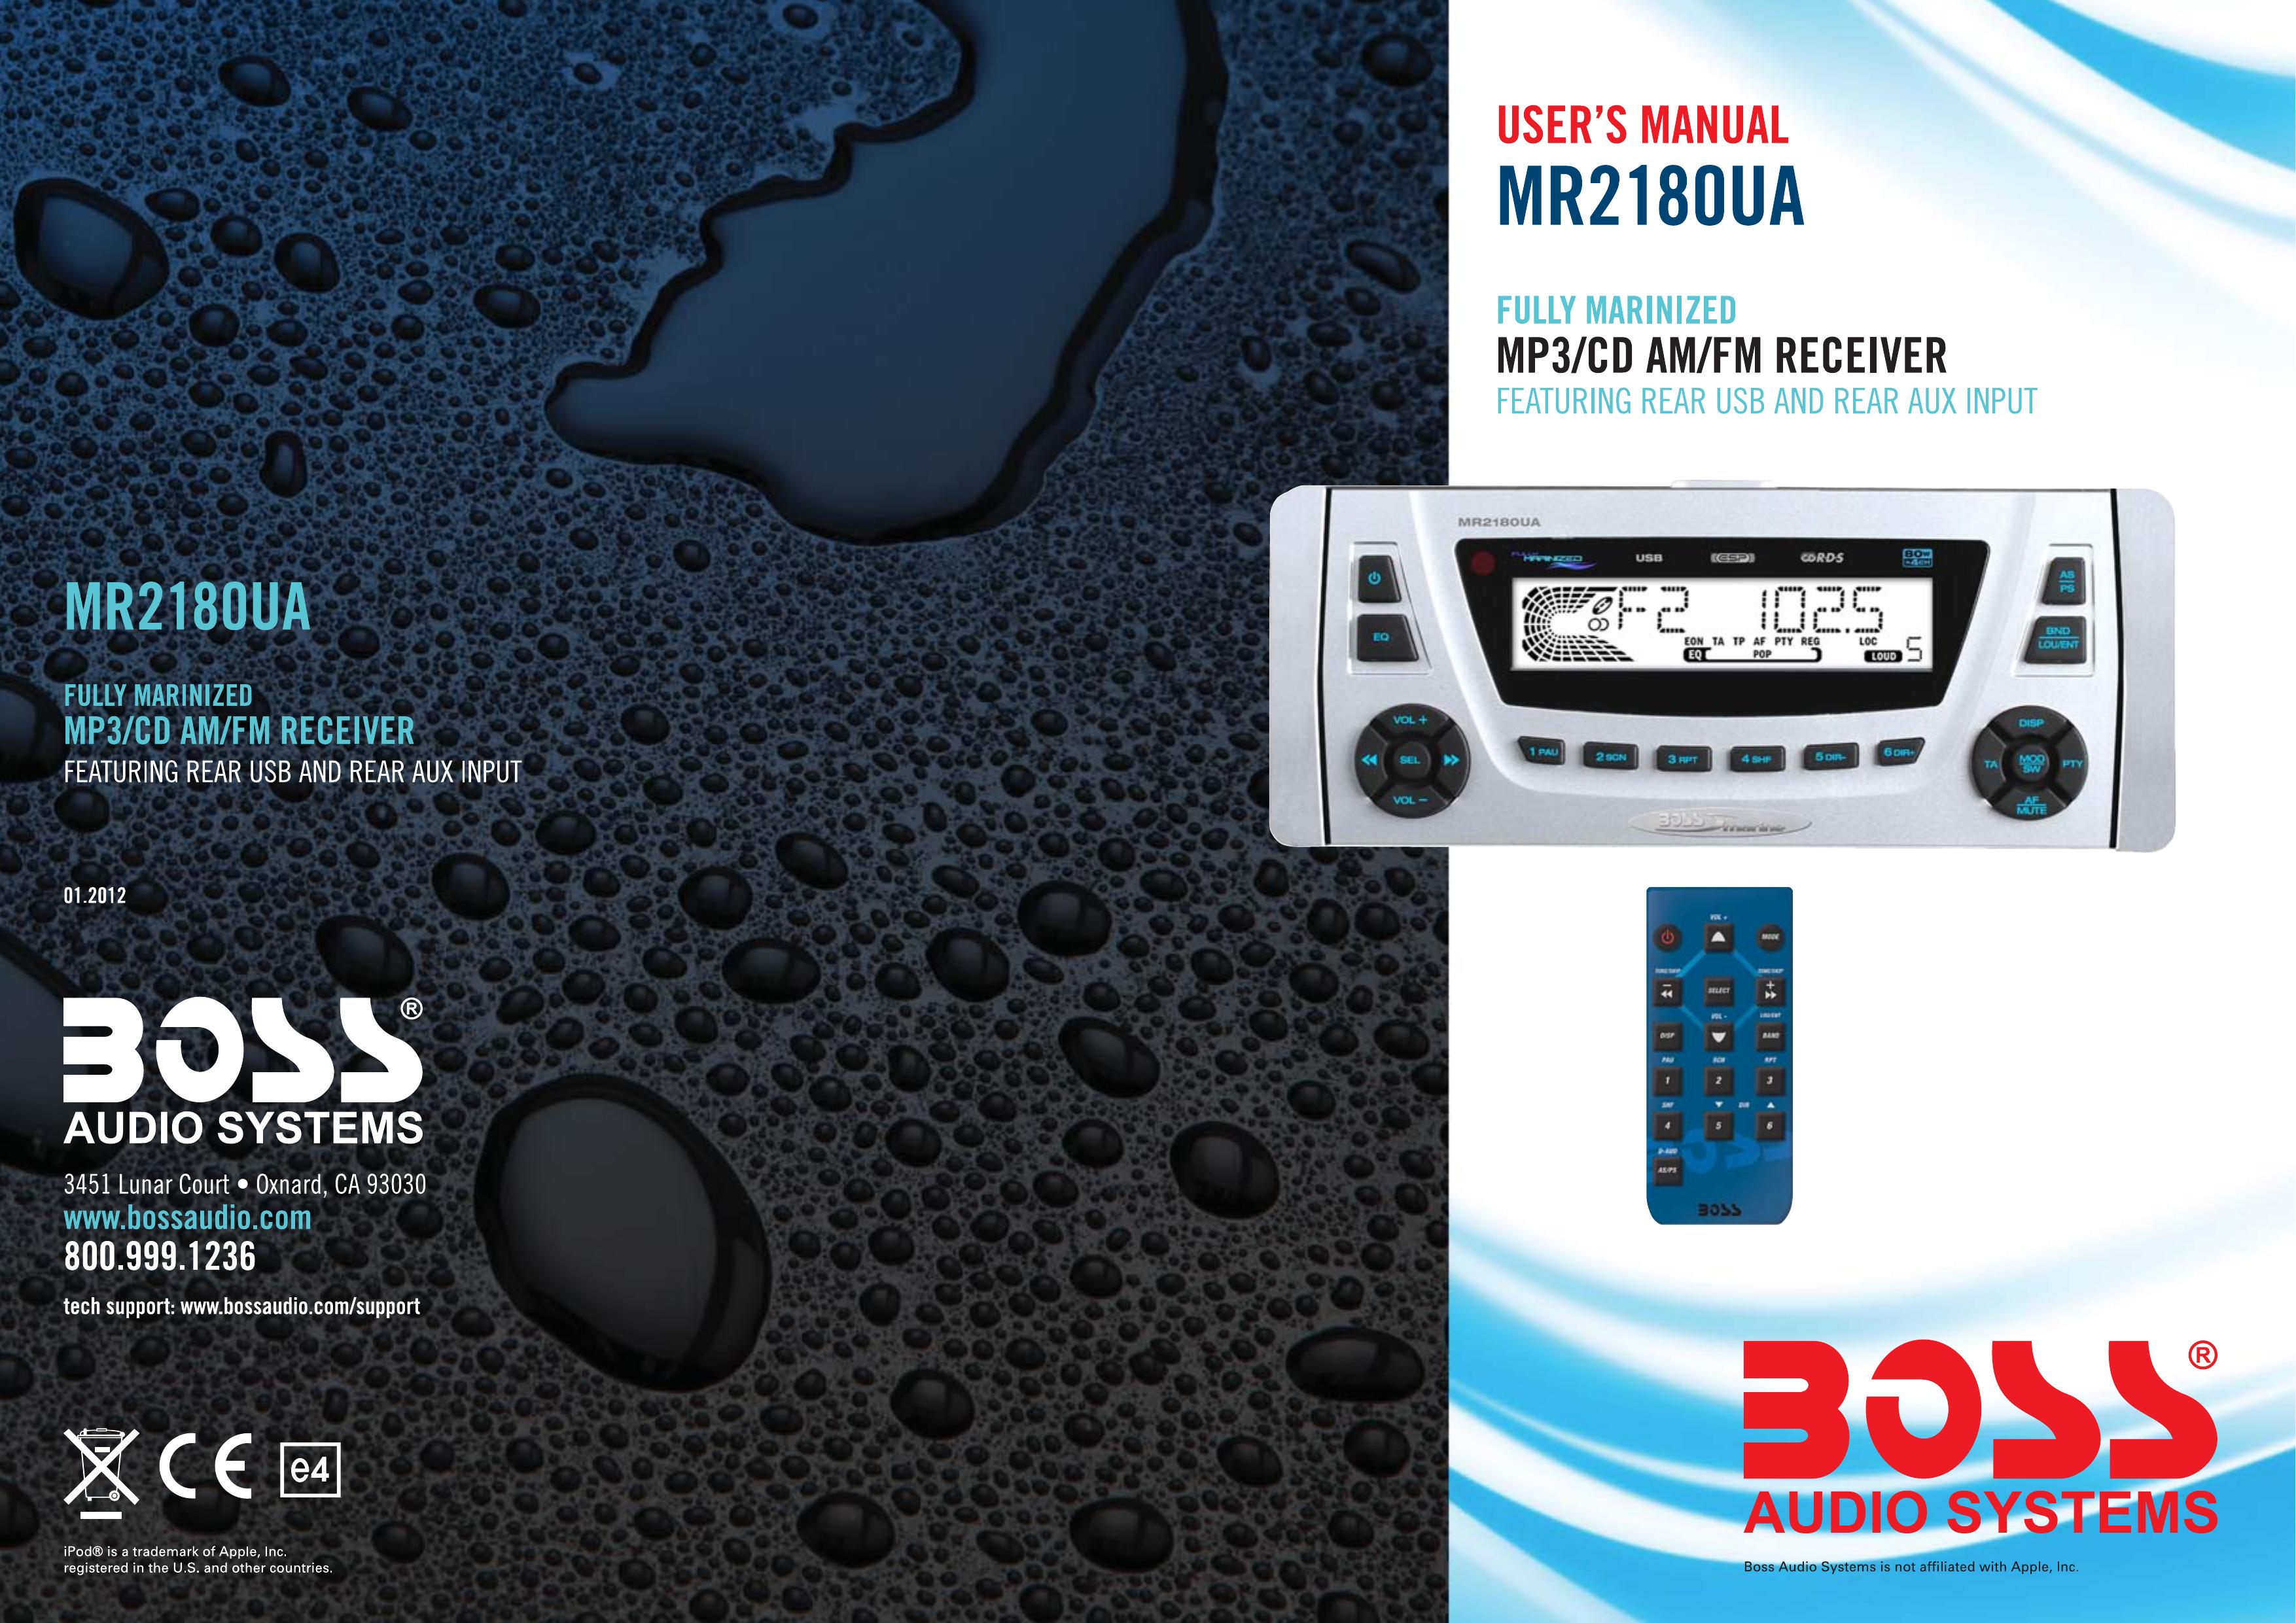 Boss Audio Systems MR218OUA Marine Radio User Manual